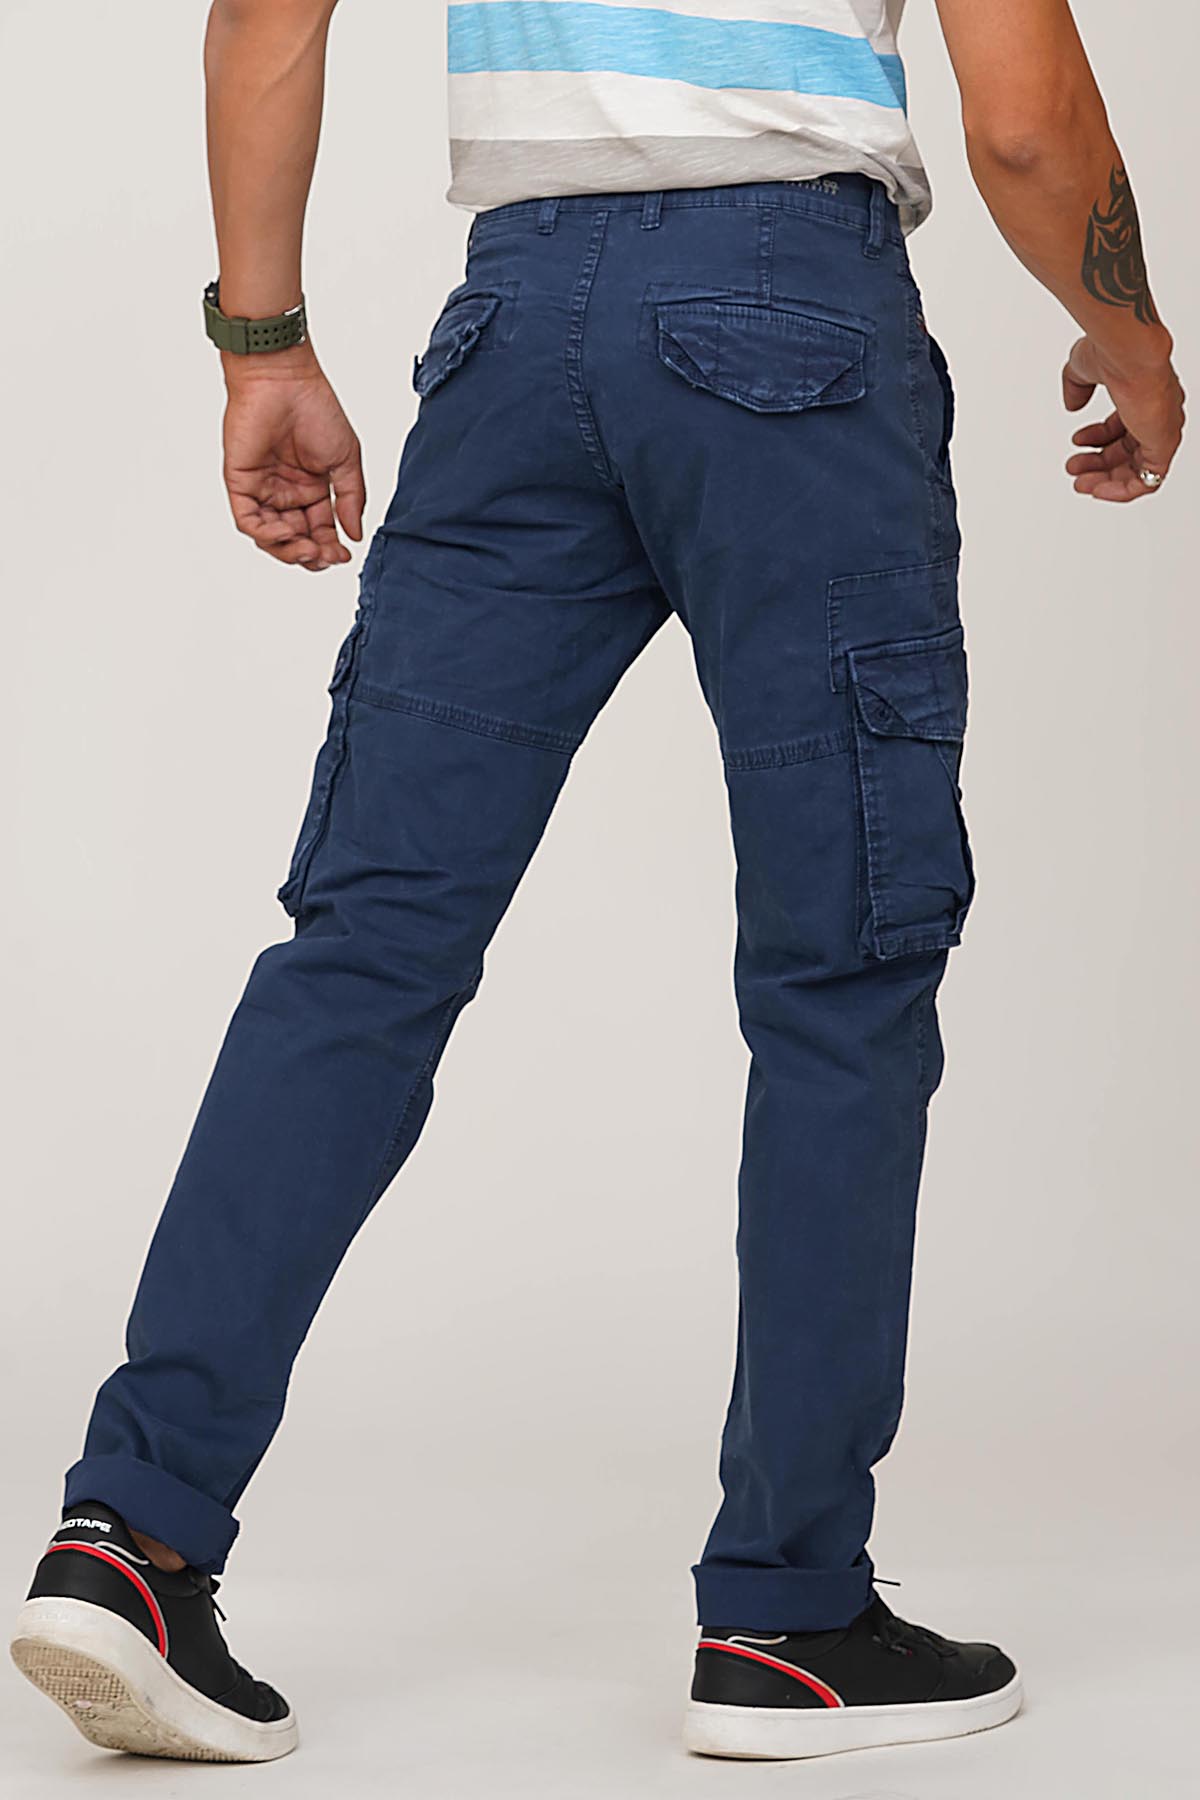 Buy Plus 91 Lycra Blend 6 Pocket Cargo Pants for Men  Stylish Slim Fit  Mens Fashion Dress Solid Trouser Casual Pant Black at Amazonin